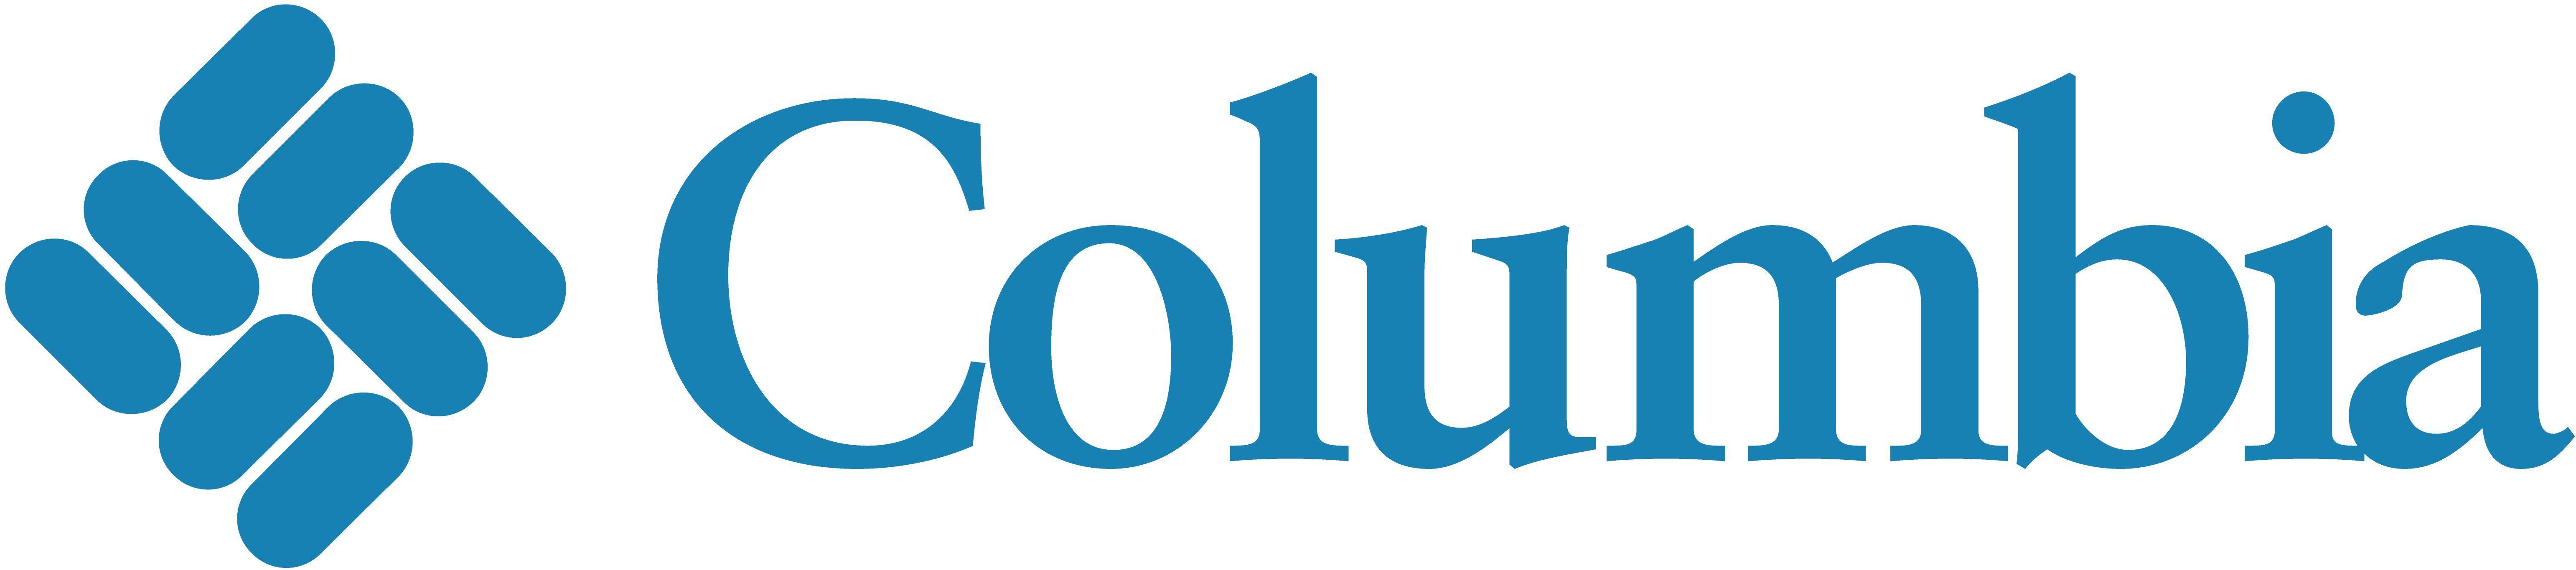 Columbia Sports Logo - New columbia pictures Logos